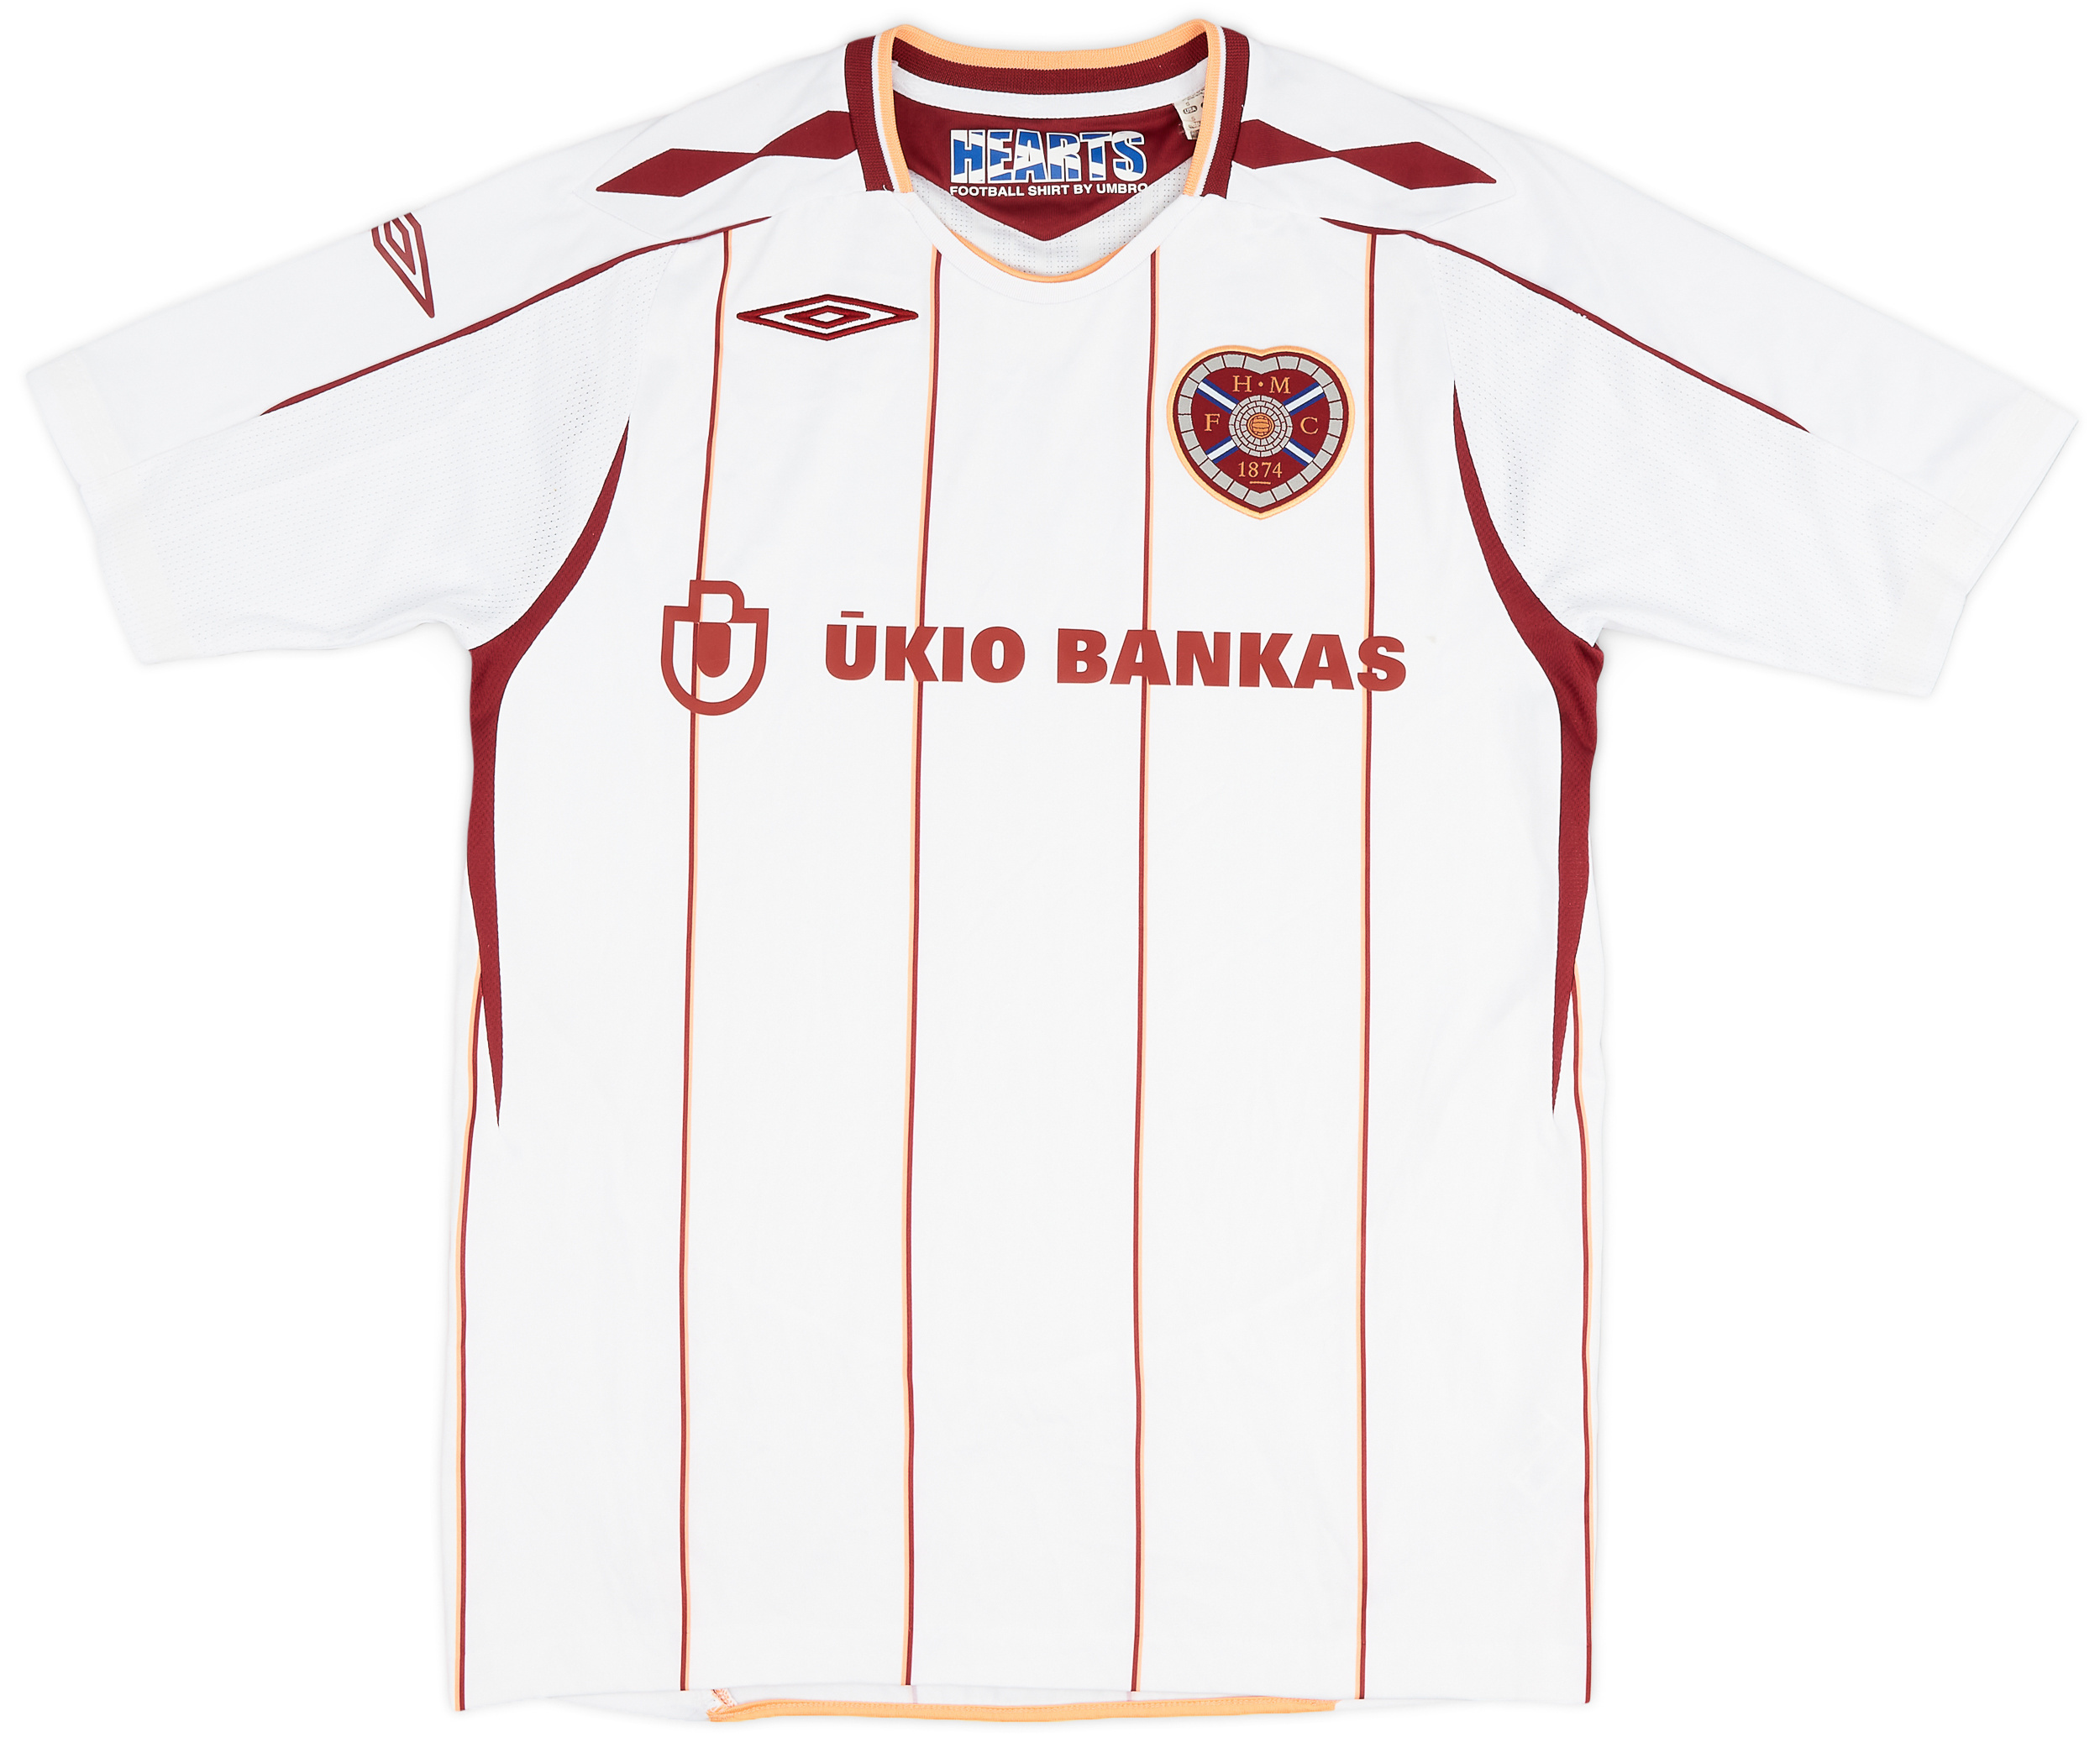 2007-08 Heart Of Midlothian (Hearts) Away Shirt - 9/10 - ()